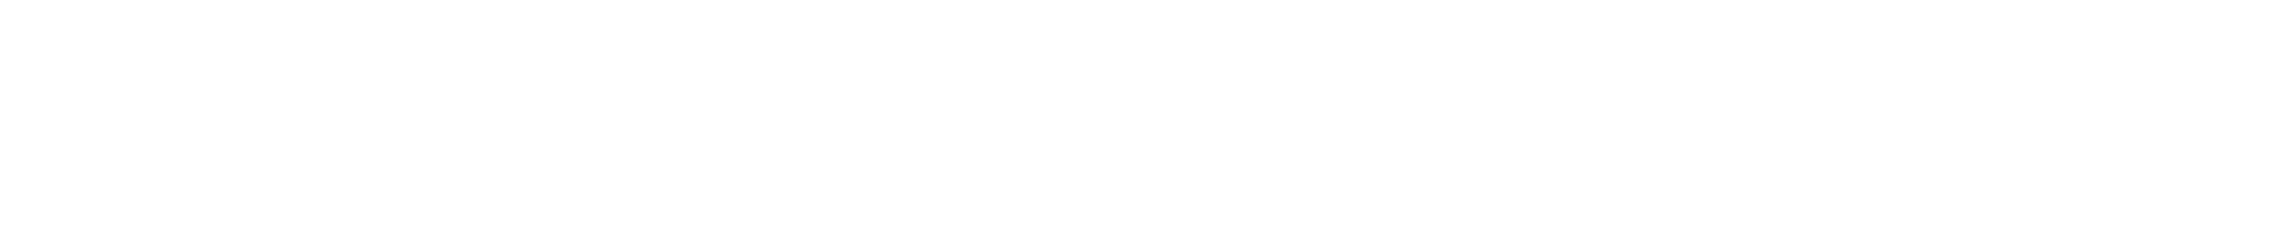 The Wall Street Journal Logo (Copy)